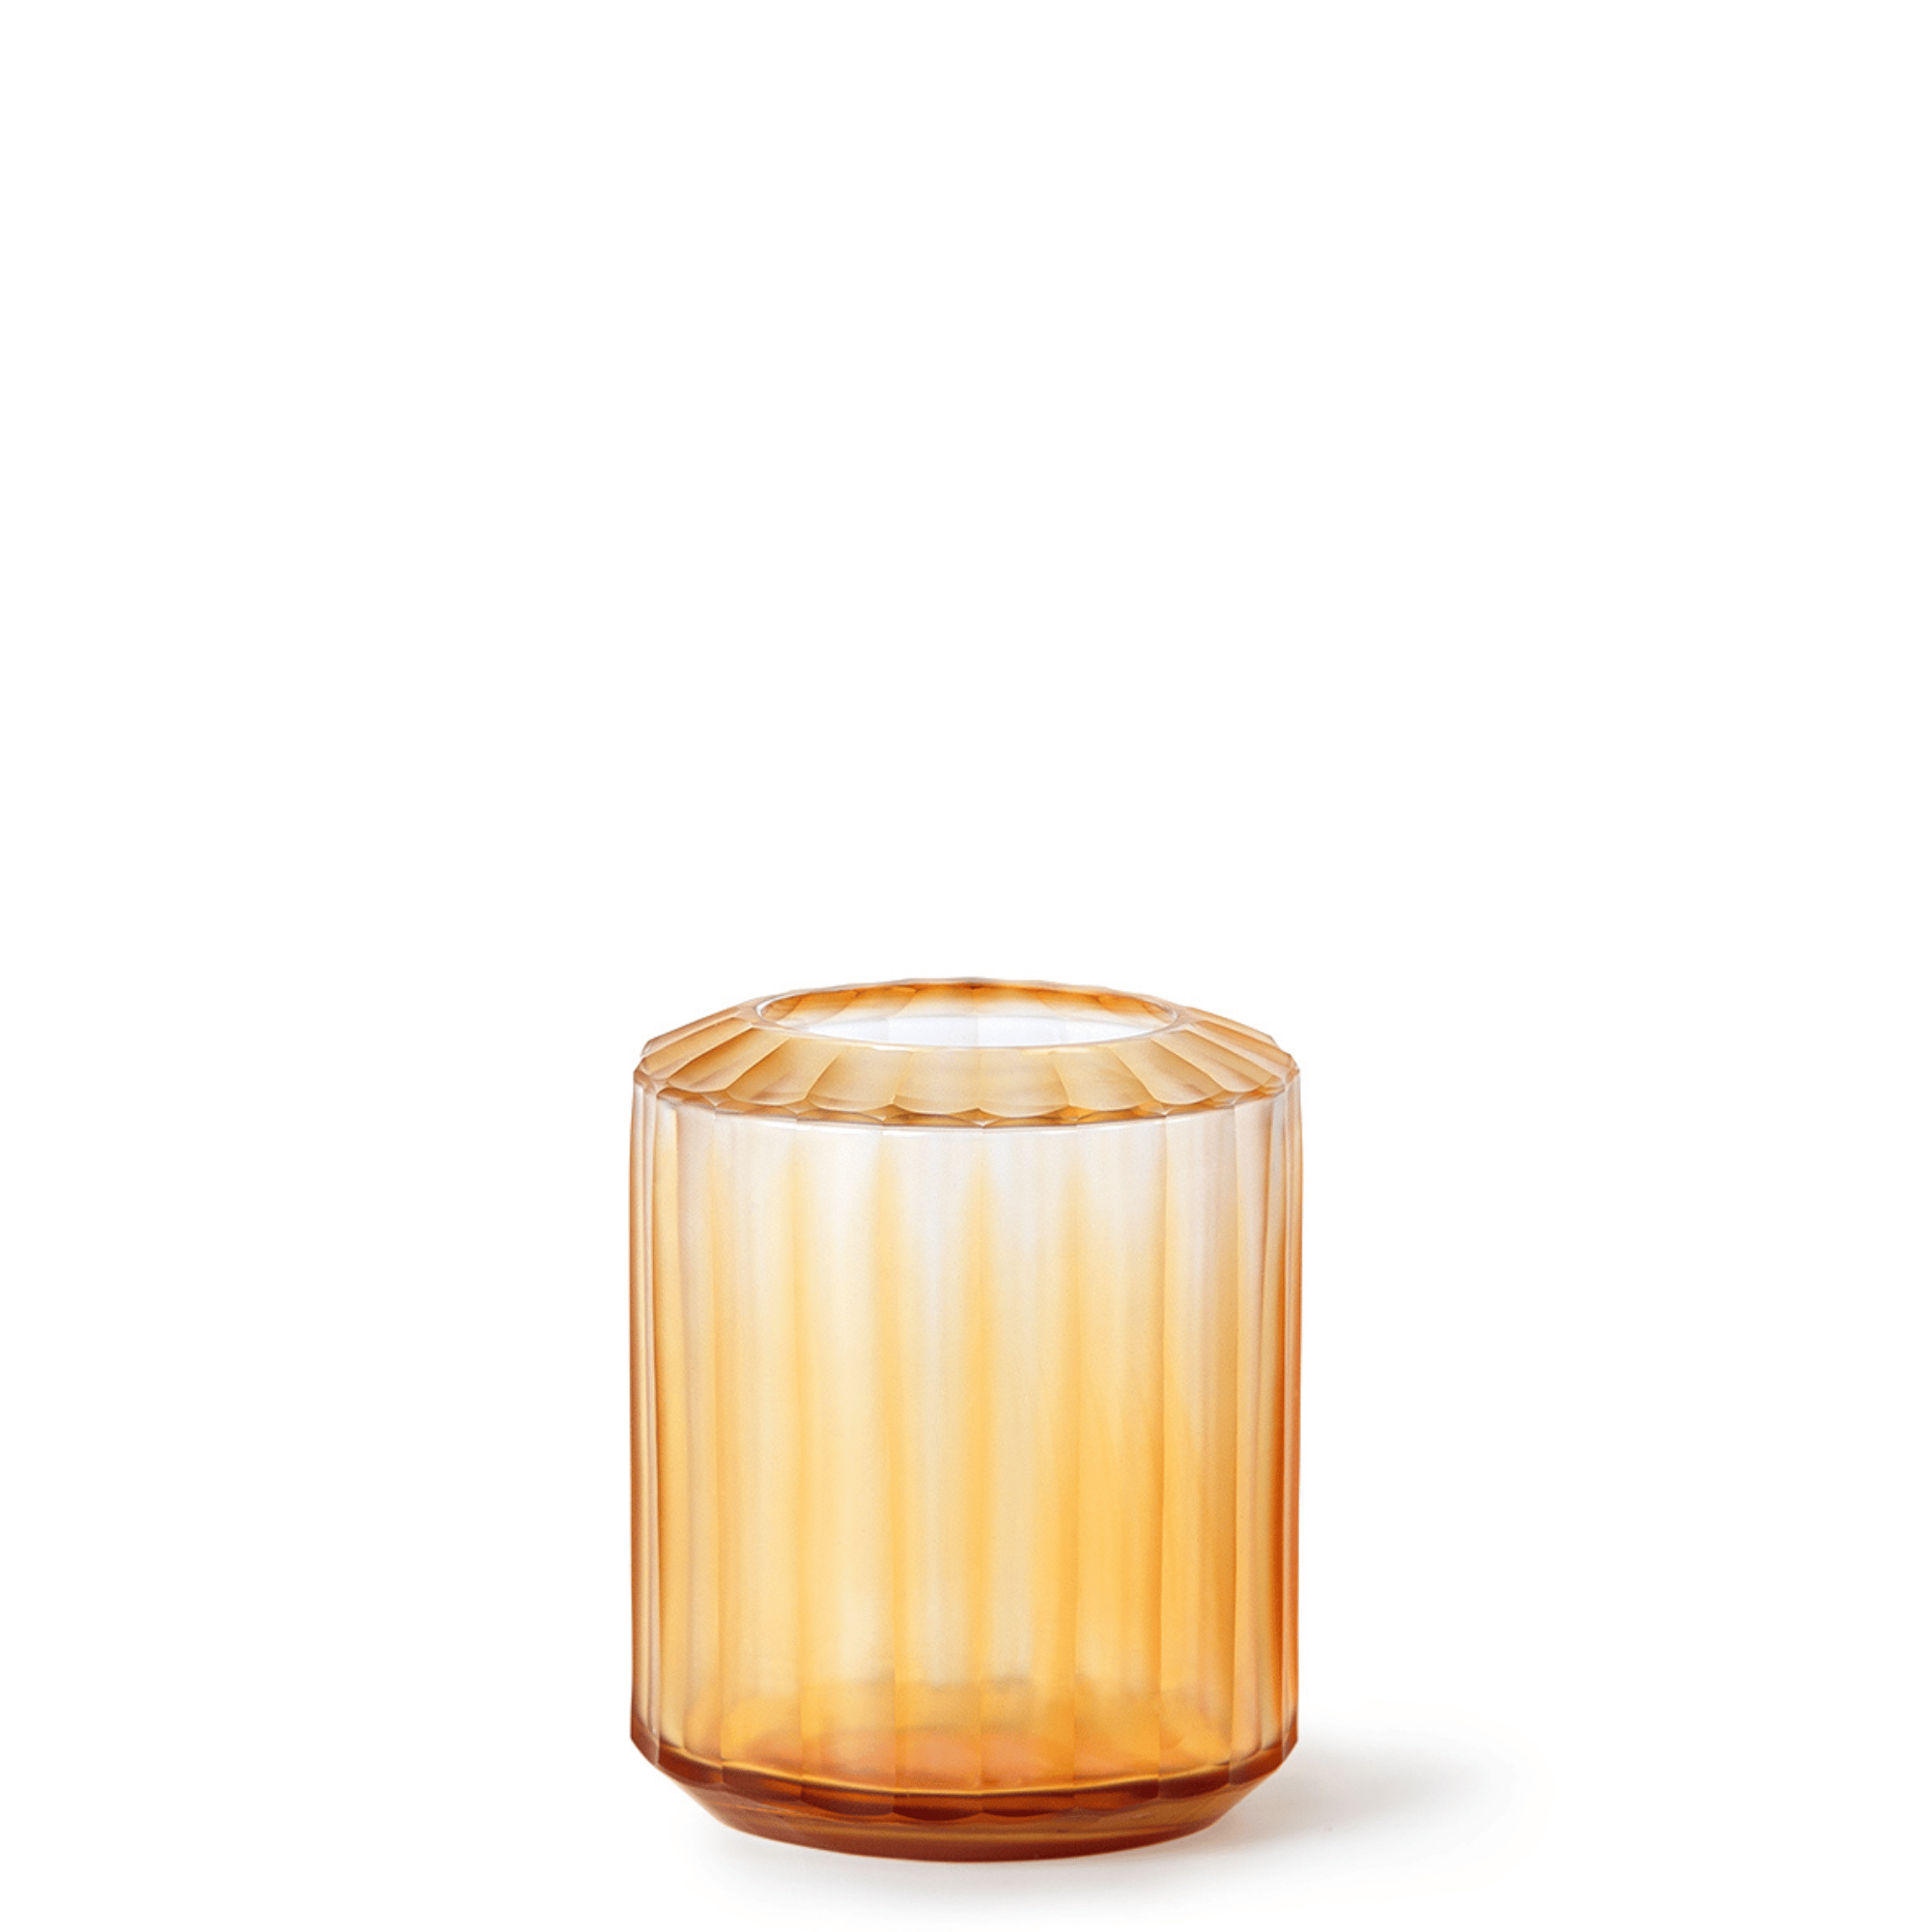 Guaxs Orange Glass Vase